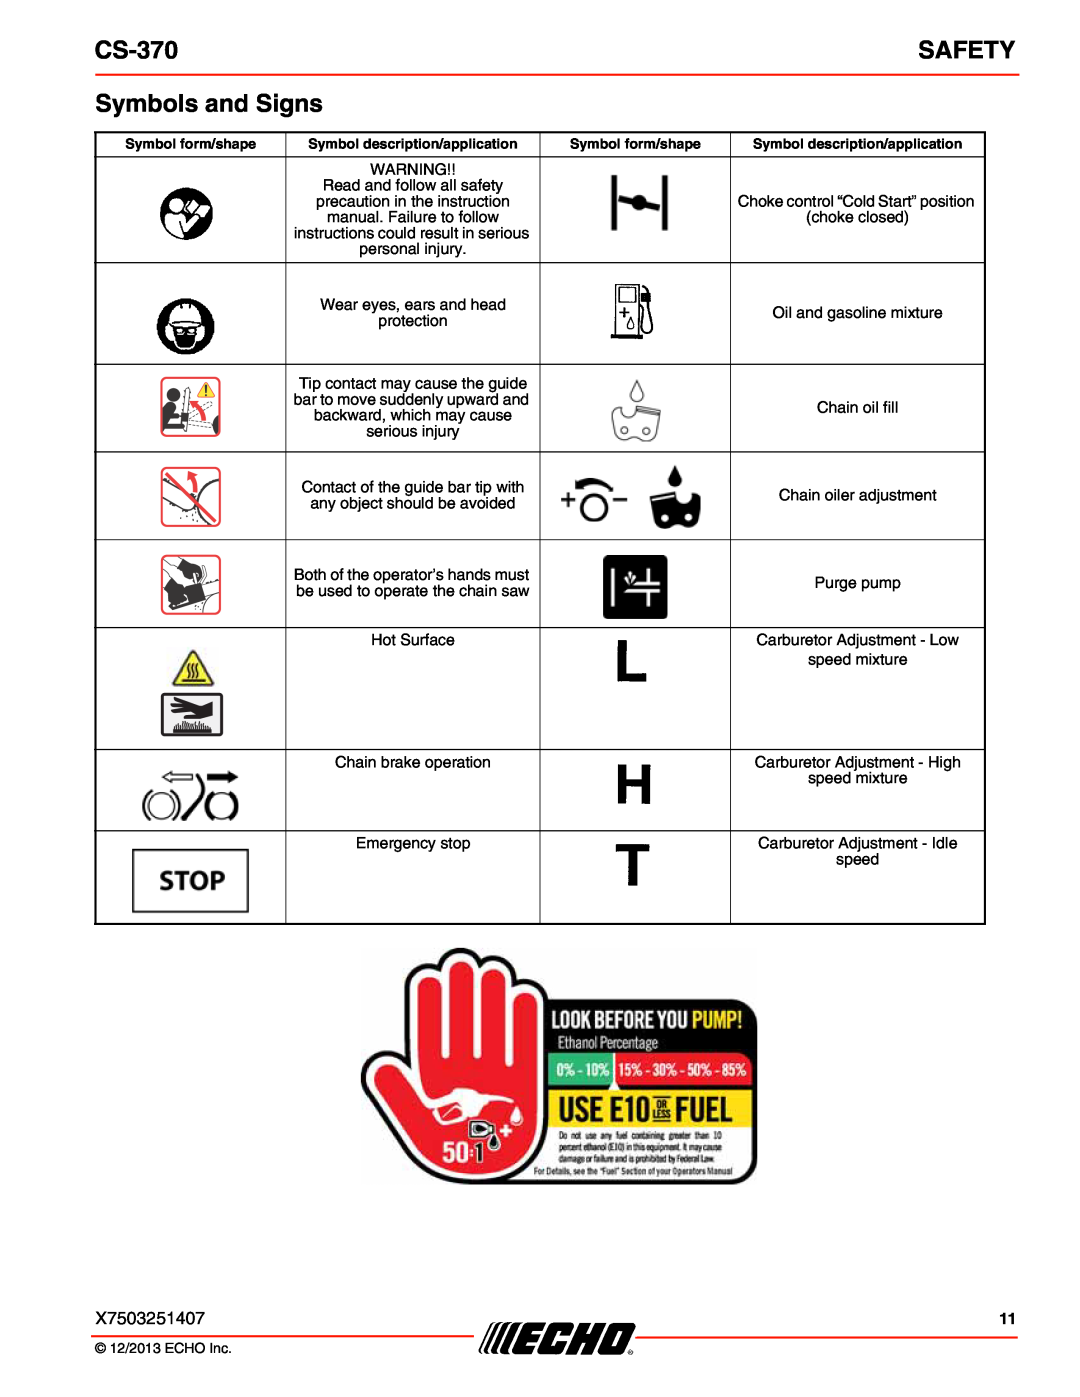 Echo CS-370 instruction manual Symbols and Signs, Safety, Symbol form/shape 